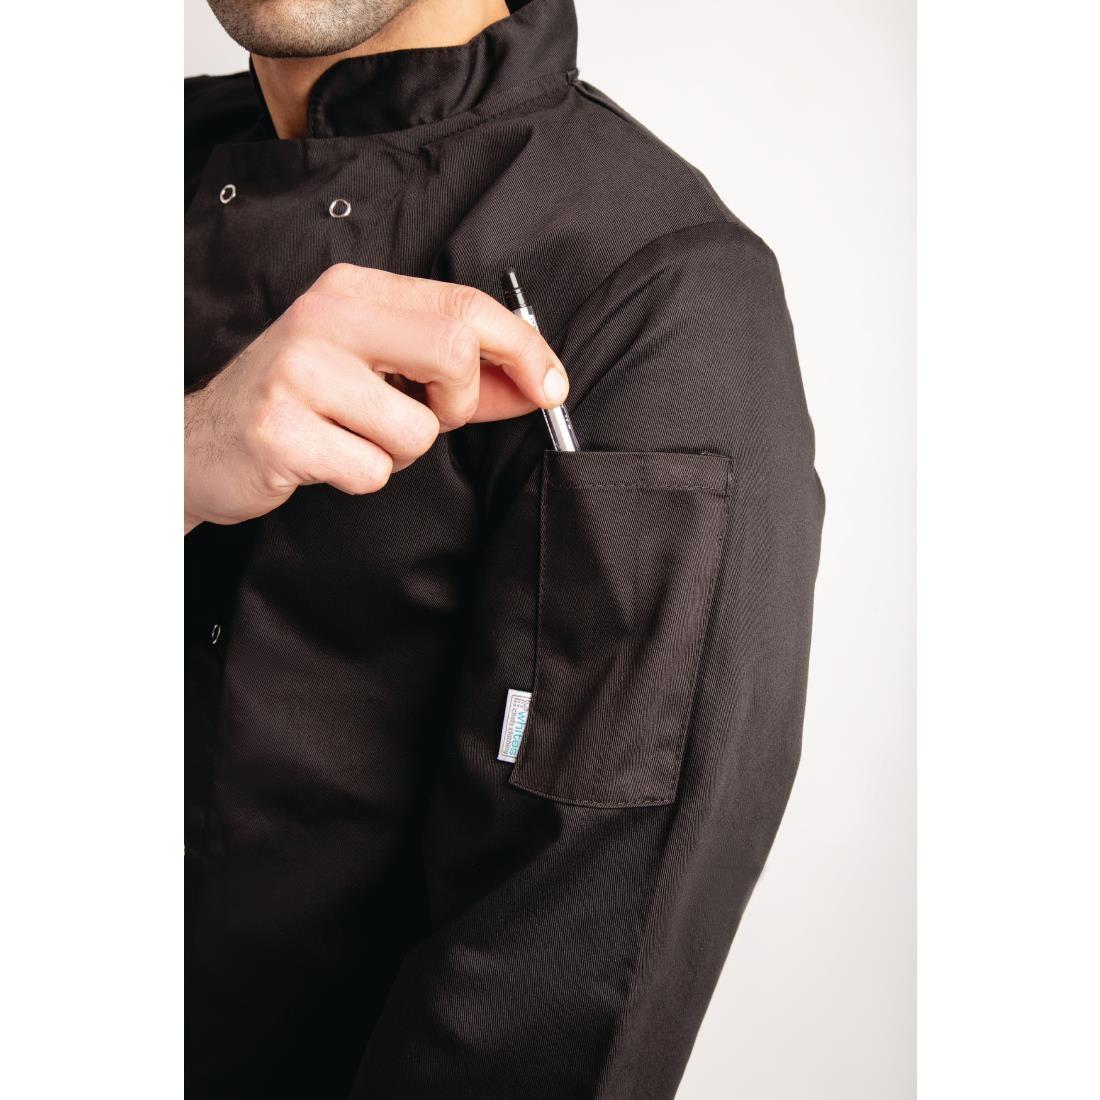 Whites Vegas Unisex Chefs Jacket Long Sleeve Black S - A438-S  - 9